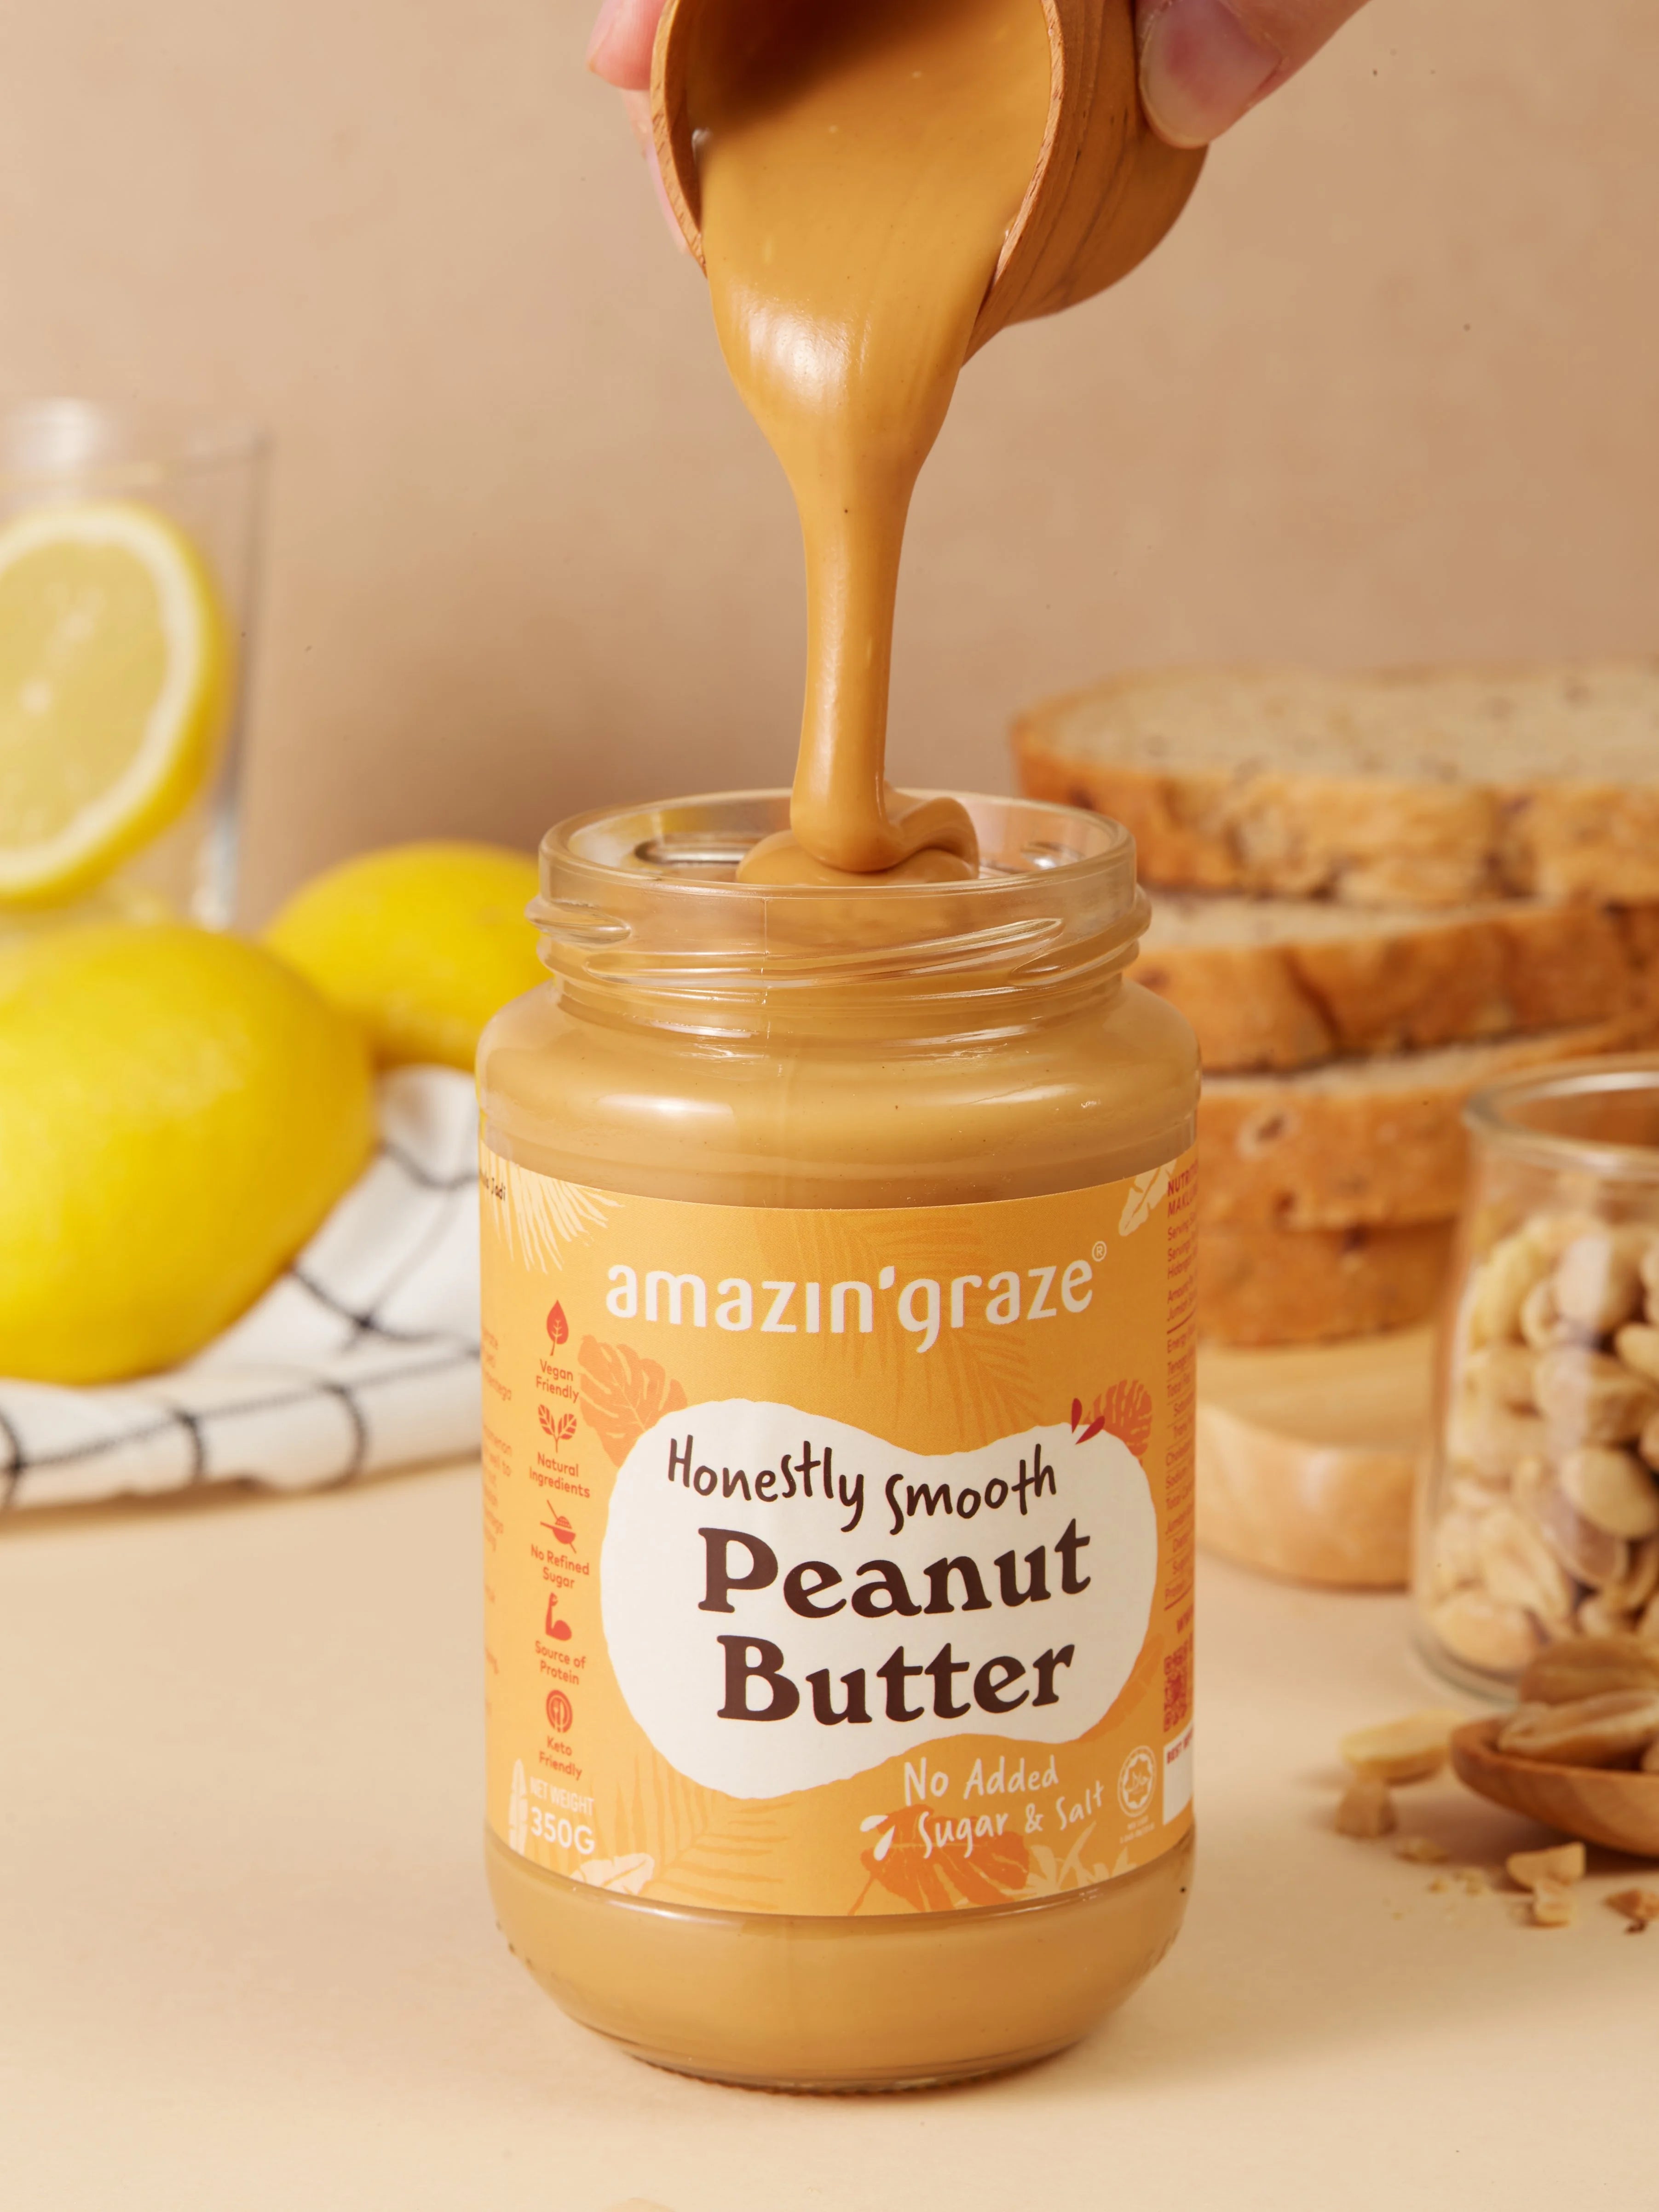 Smooth Peanut Butter [Salt & Sugar Free] - Amazin' Graze Malaysia